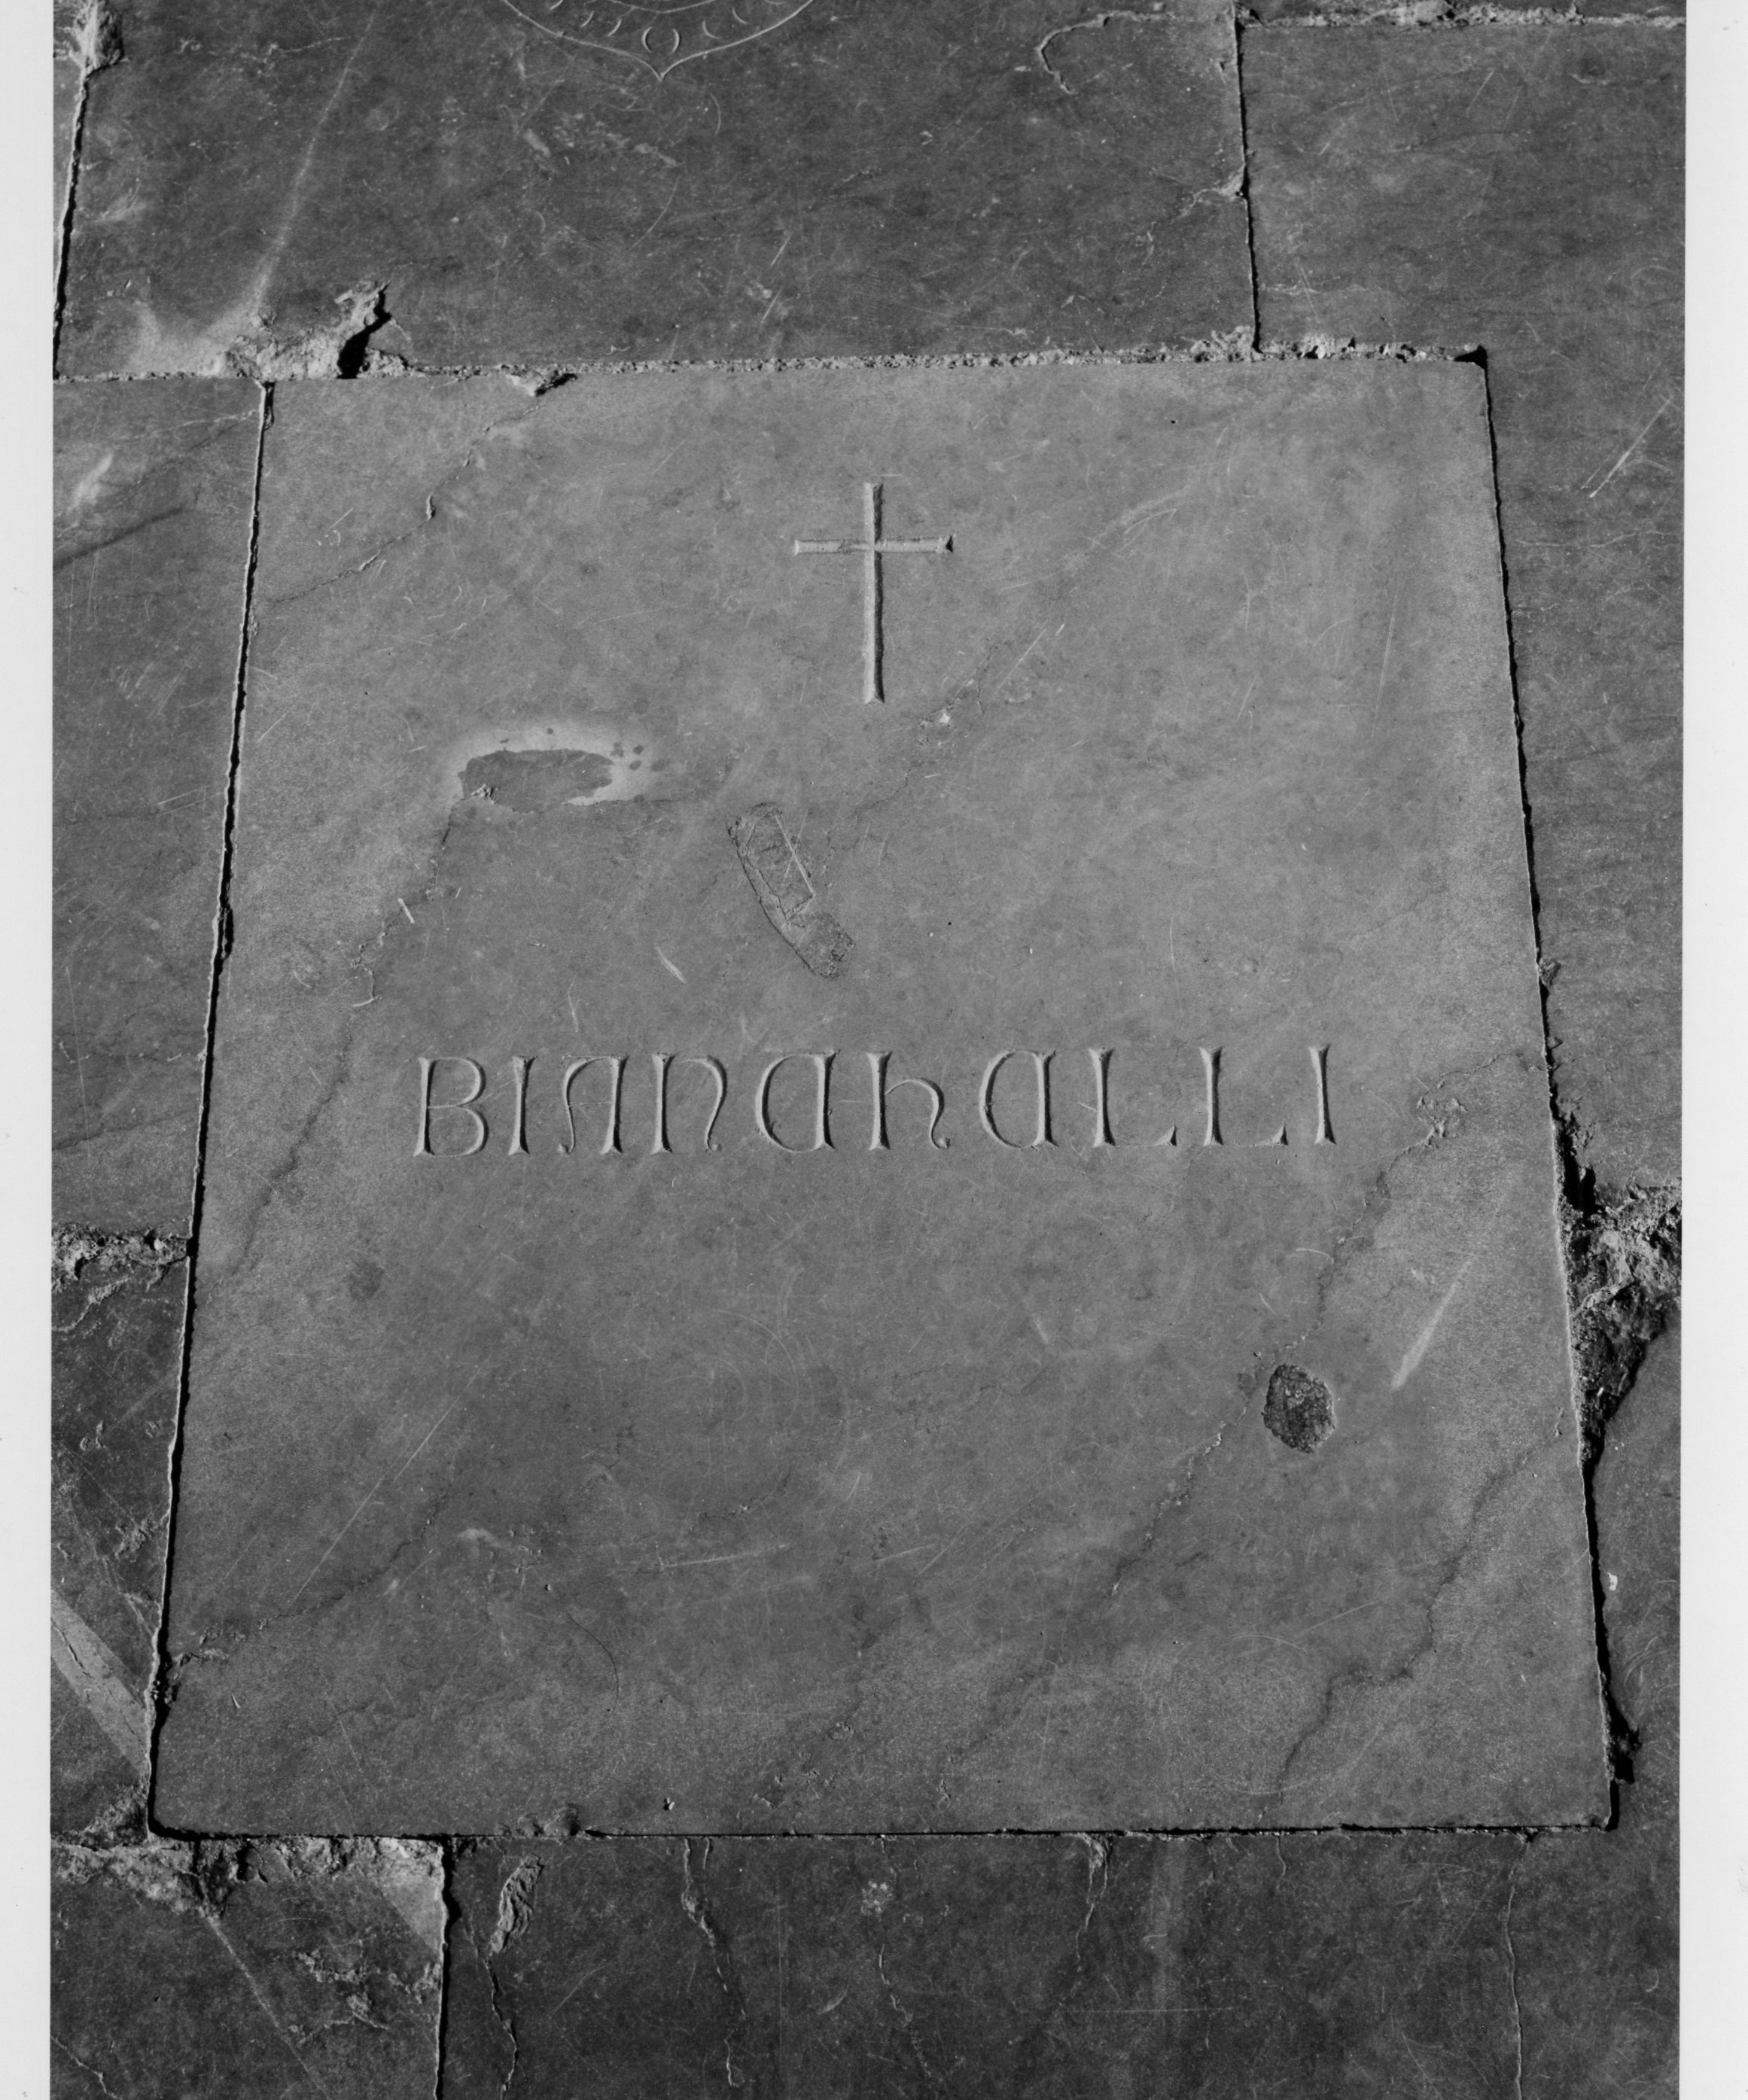 lapide tombale, opera isolata - ambito orvietano (sec. XIX)